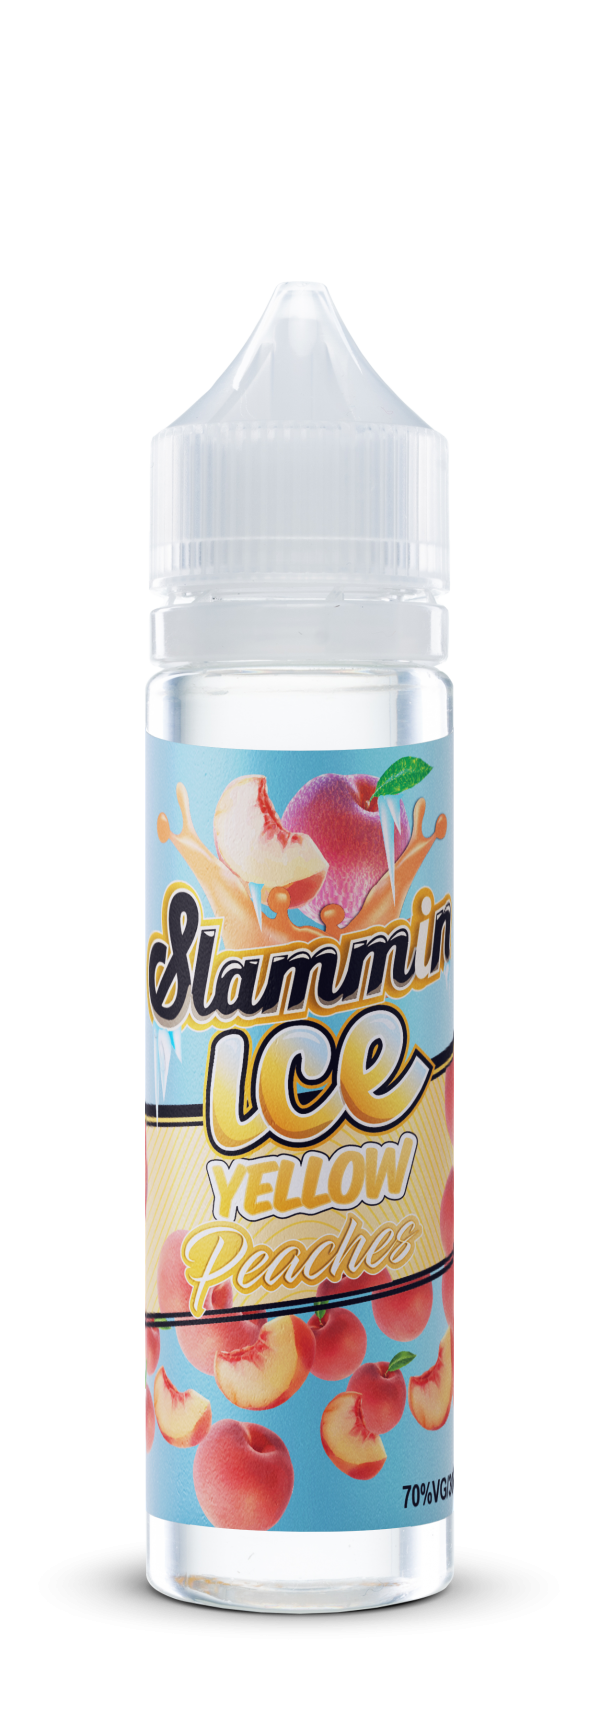 Slammin Peach ice 60ml